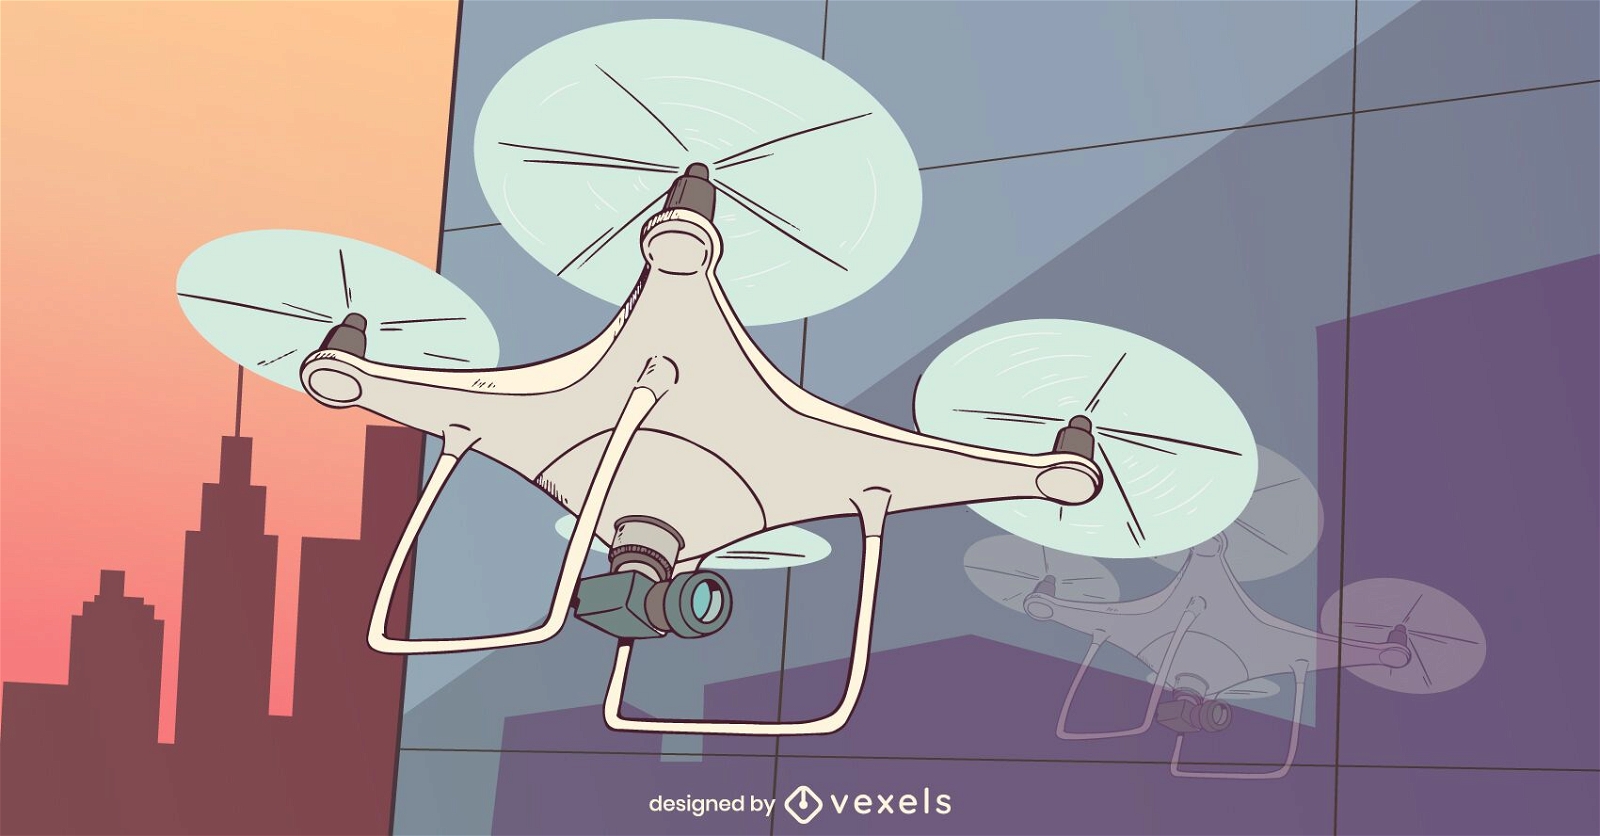 Quadcopter drone illustration design